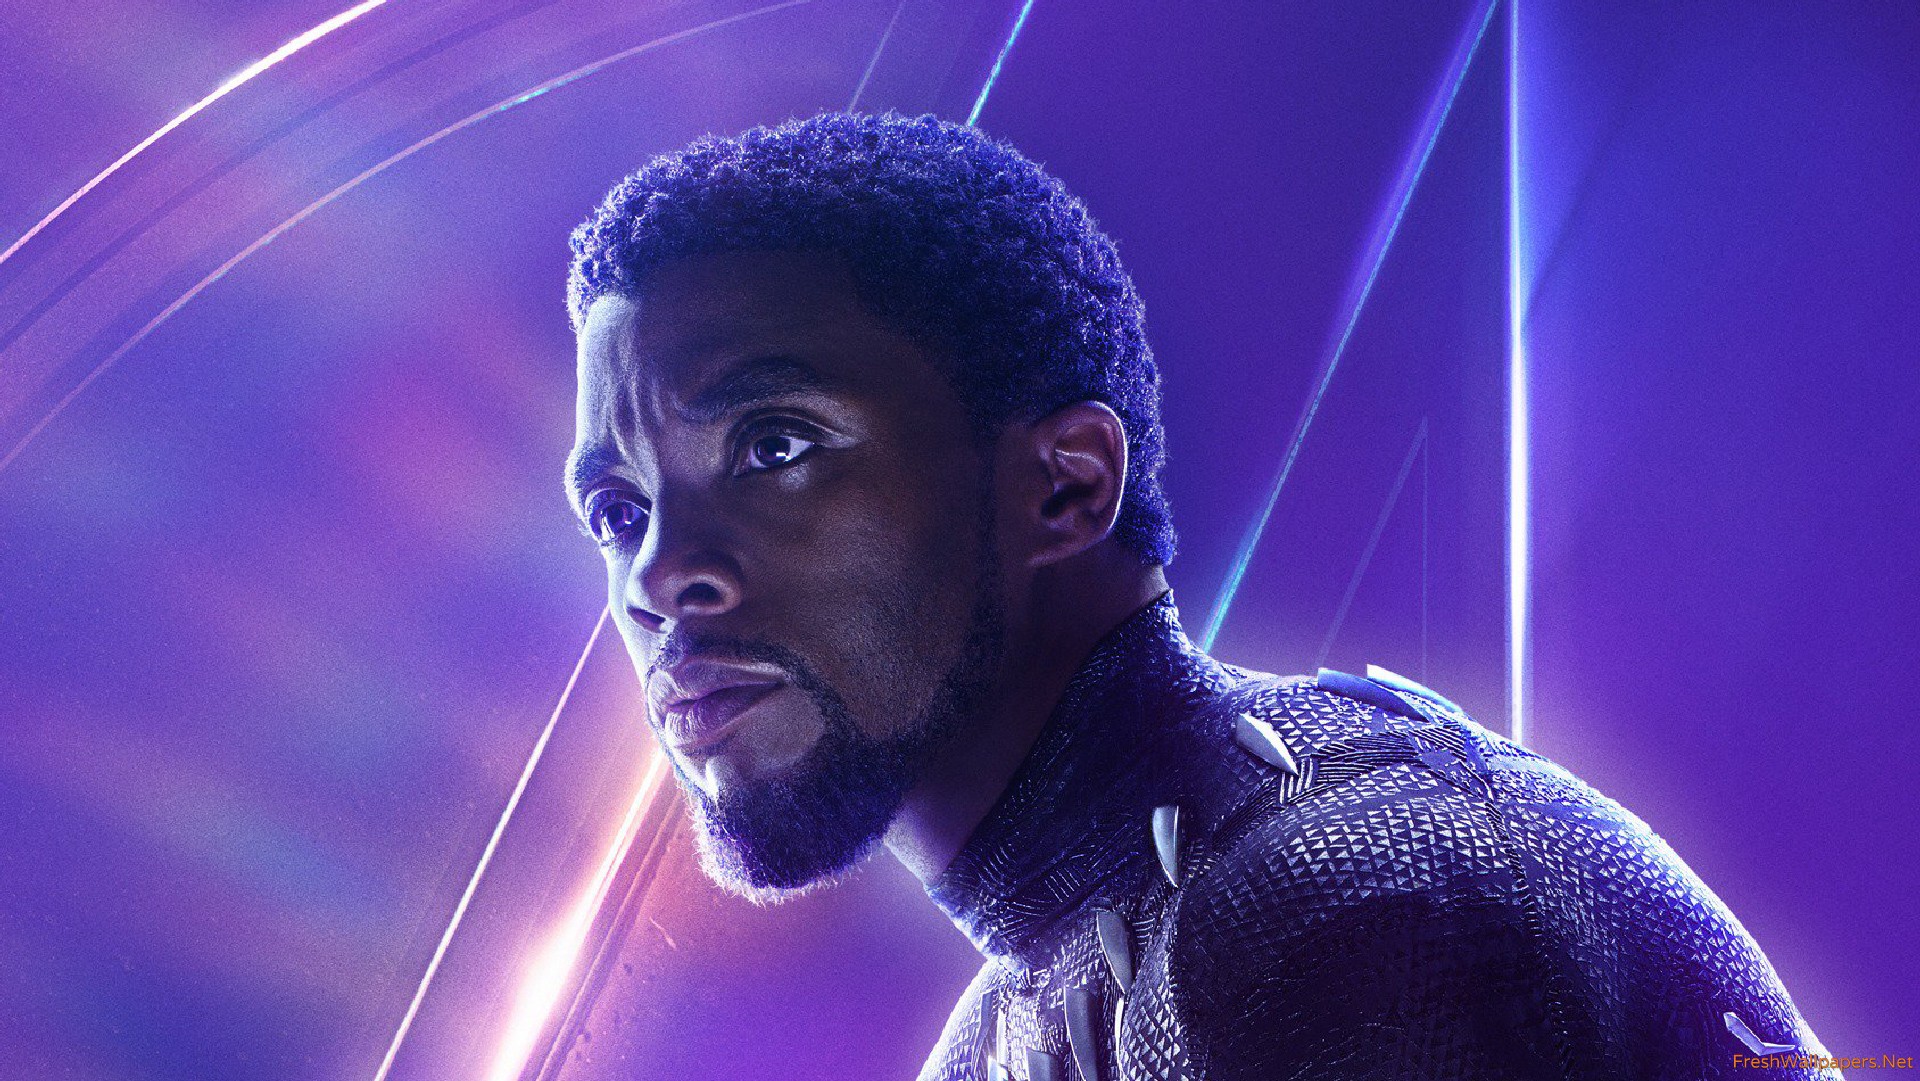 Black Panther In Avengers Infinity War New Poster Wallpaper Download High Resolution 4k Wallpaper